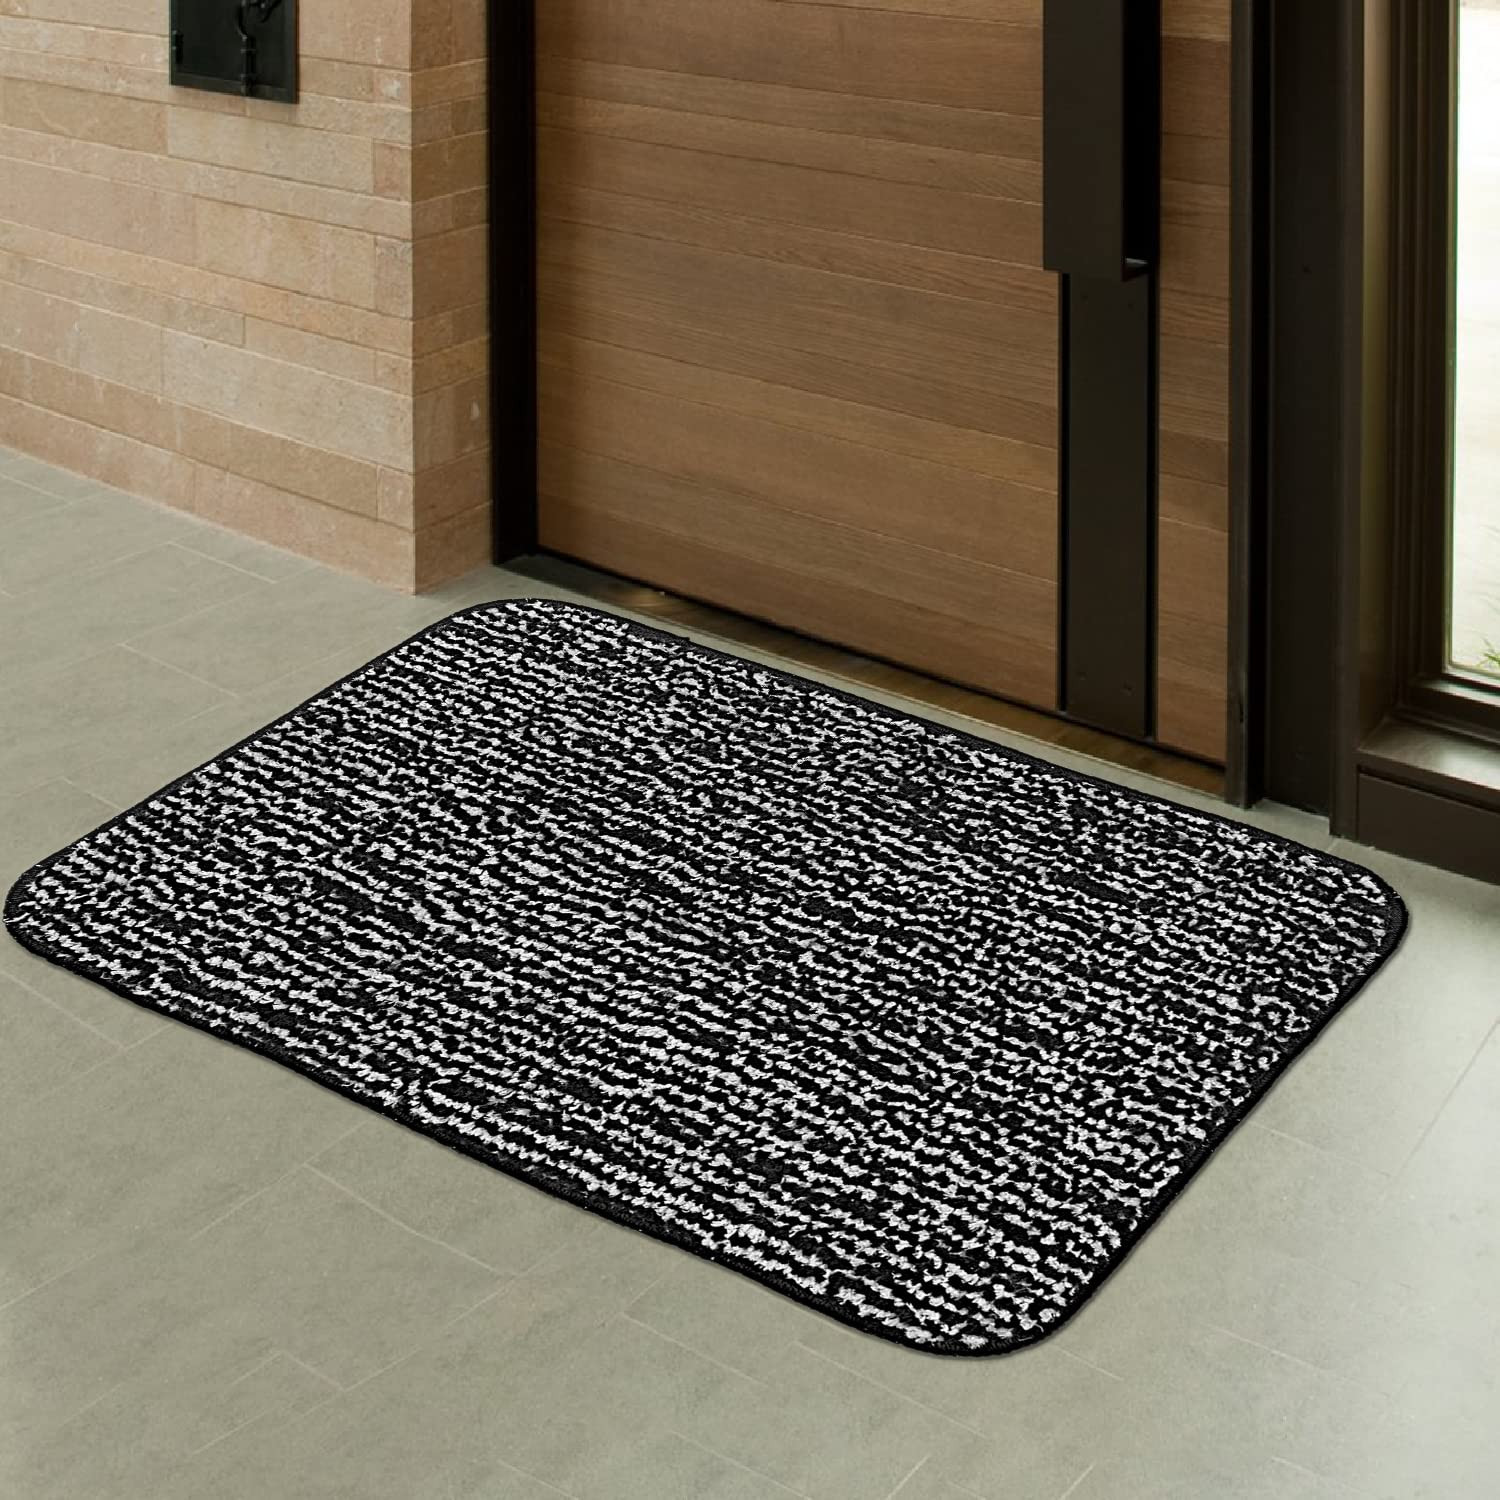 Kuber Industries Door mat | Microfiber Water Absorbant Floor Mat | Bold Stripes Pattern Entrance Mat for Kitchen, Bedside, Door, Living Room,60x40 cm, Pack of 2 (Black)